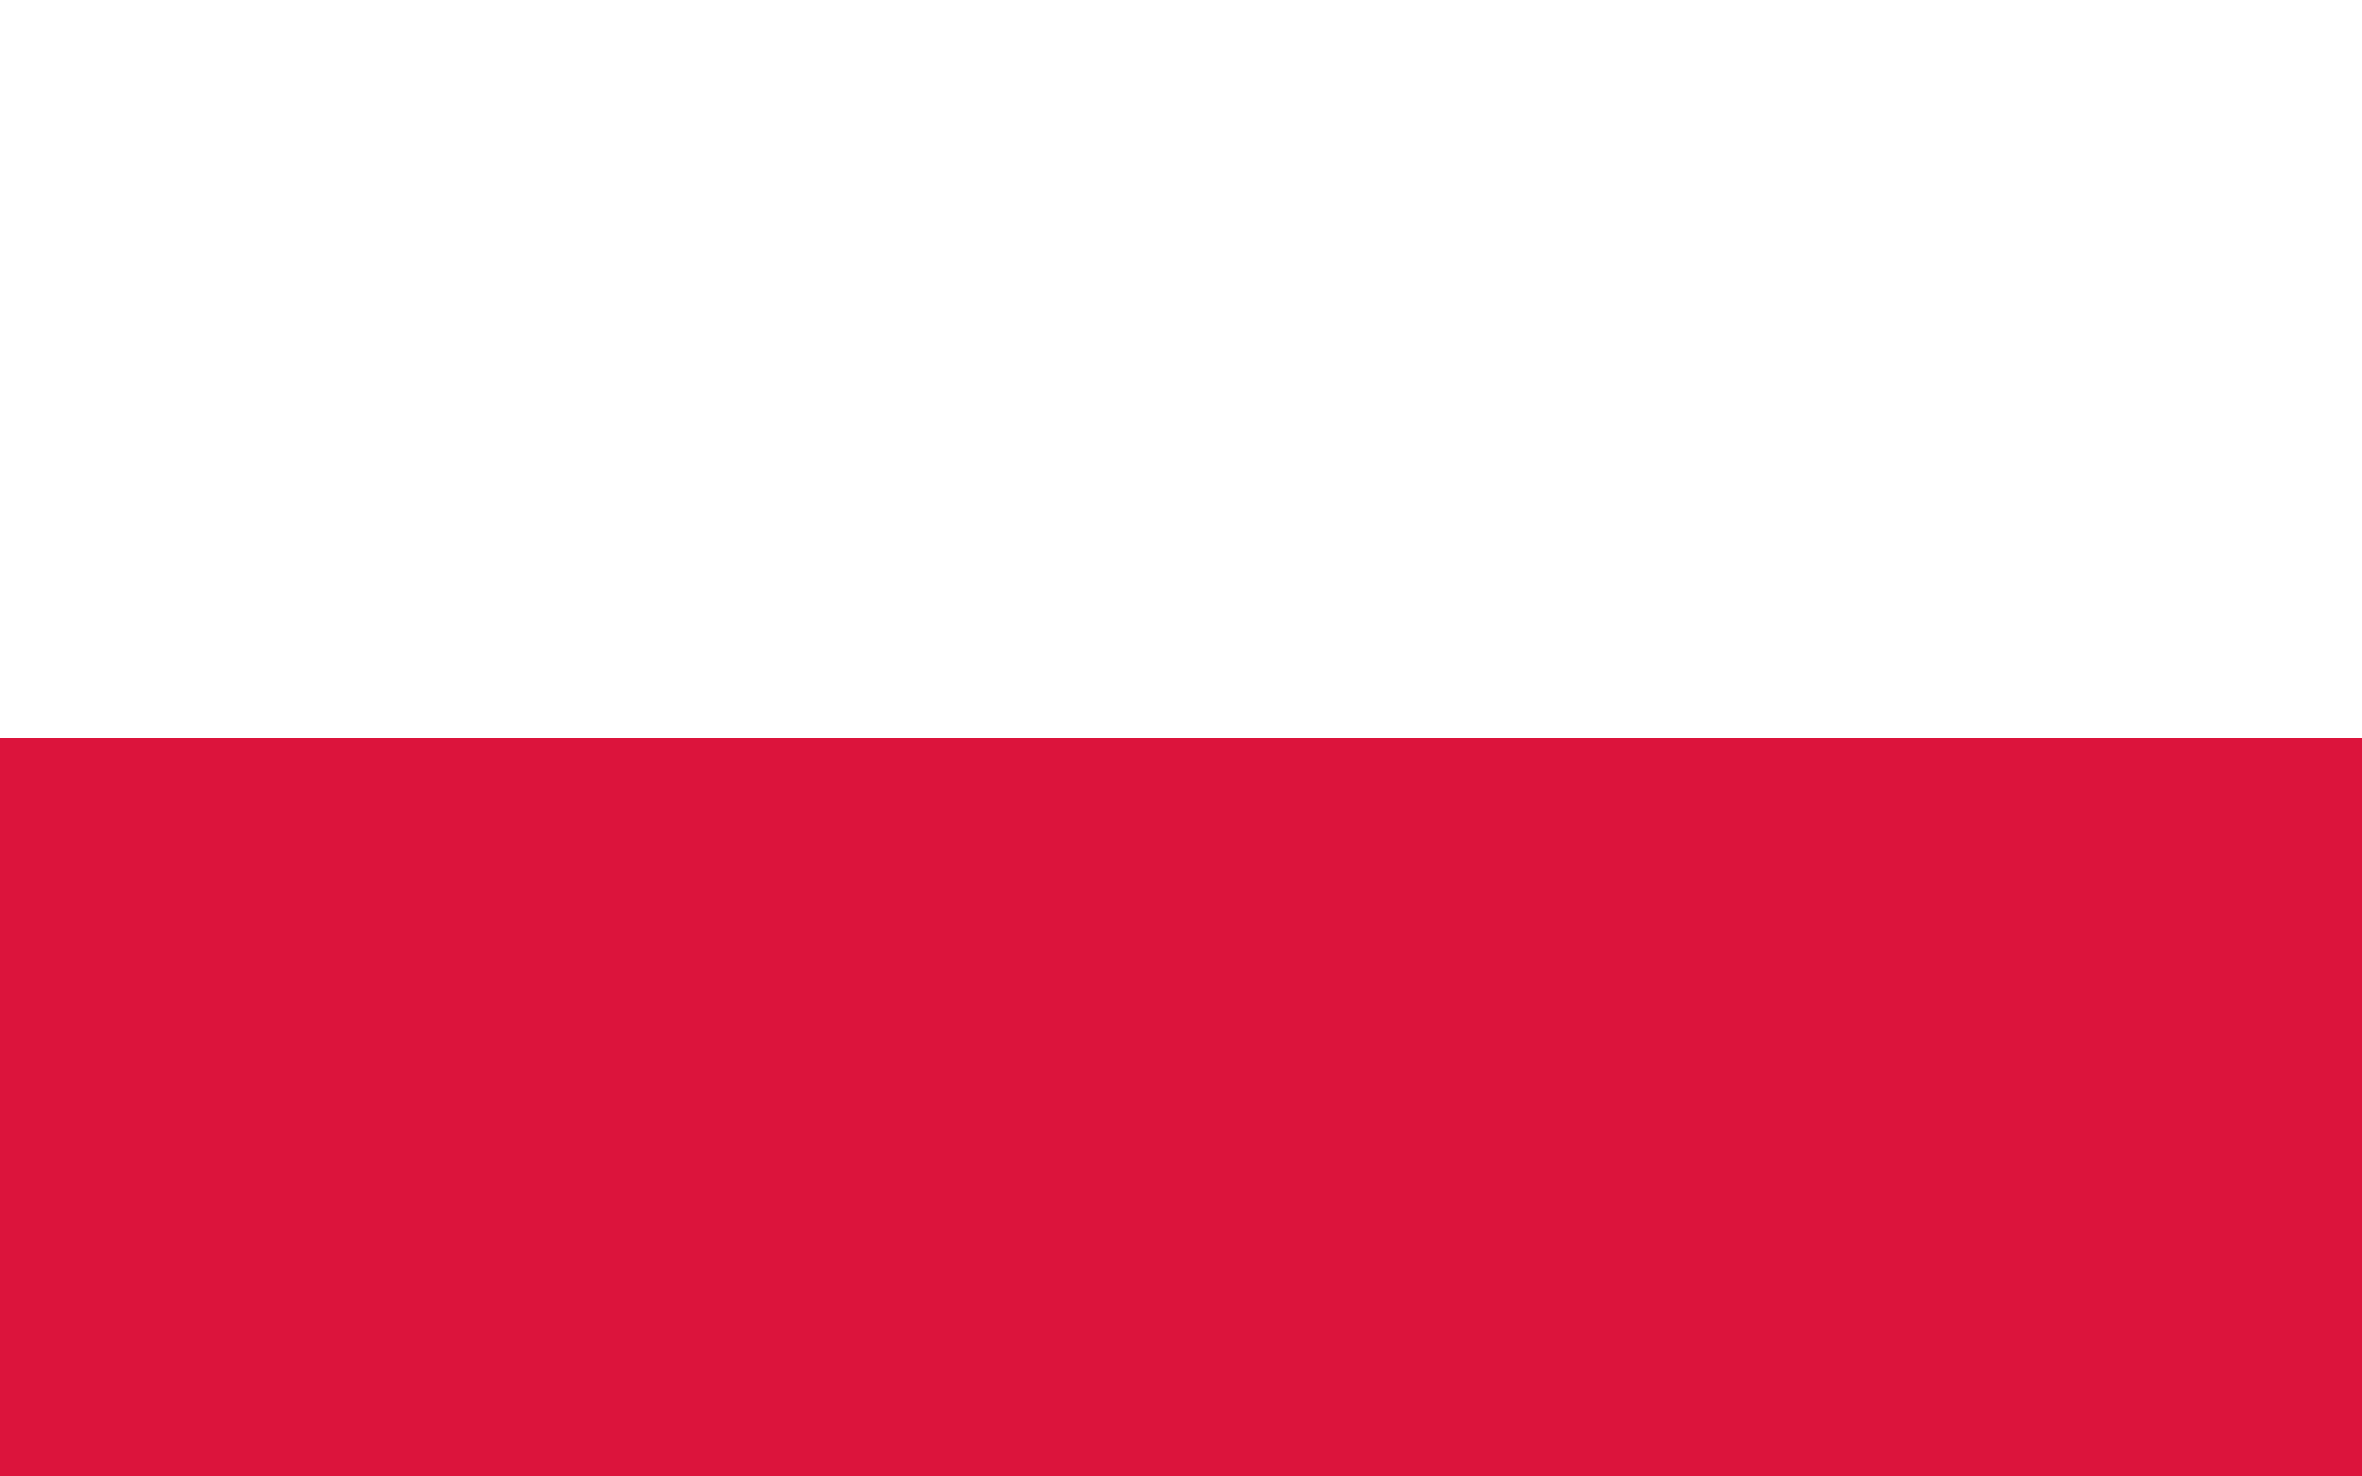 Poland Flag Blank Template - Imgflip